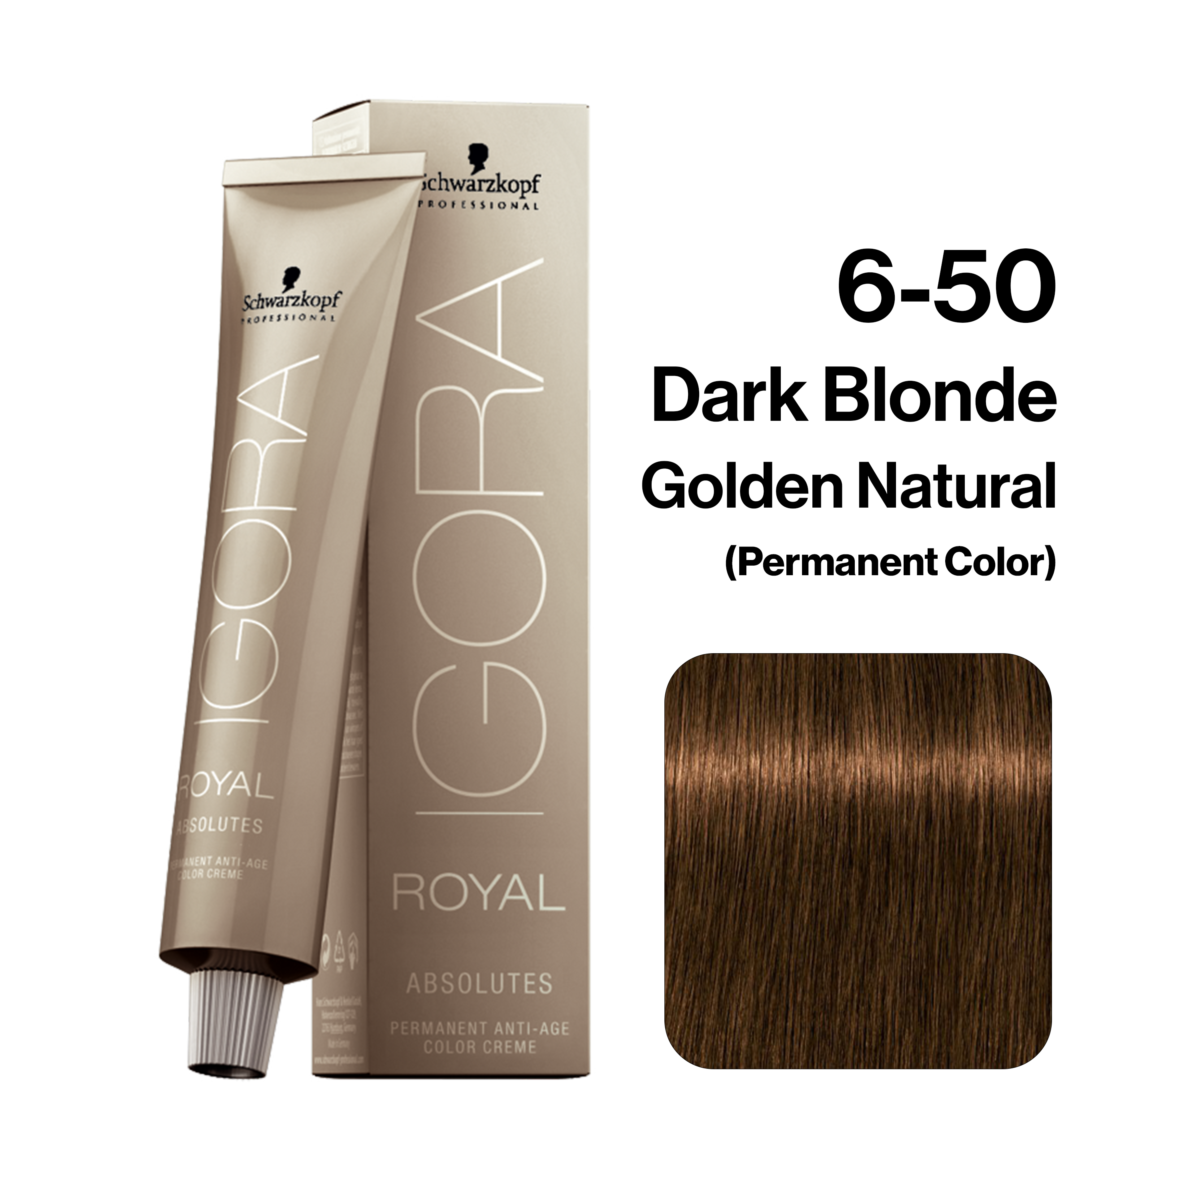 Schwarzkopf Igora Royal Absolutes Hair Color, 6-50 Dark Blonde Golden Natural 60ml